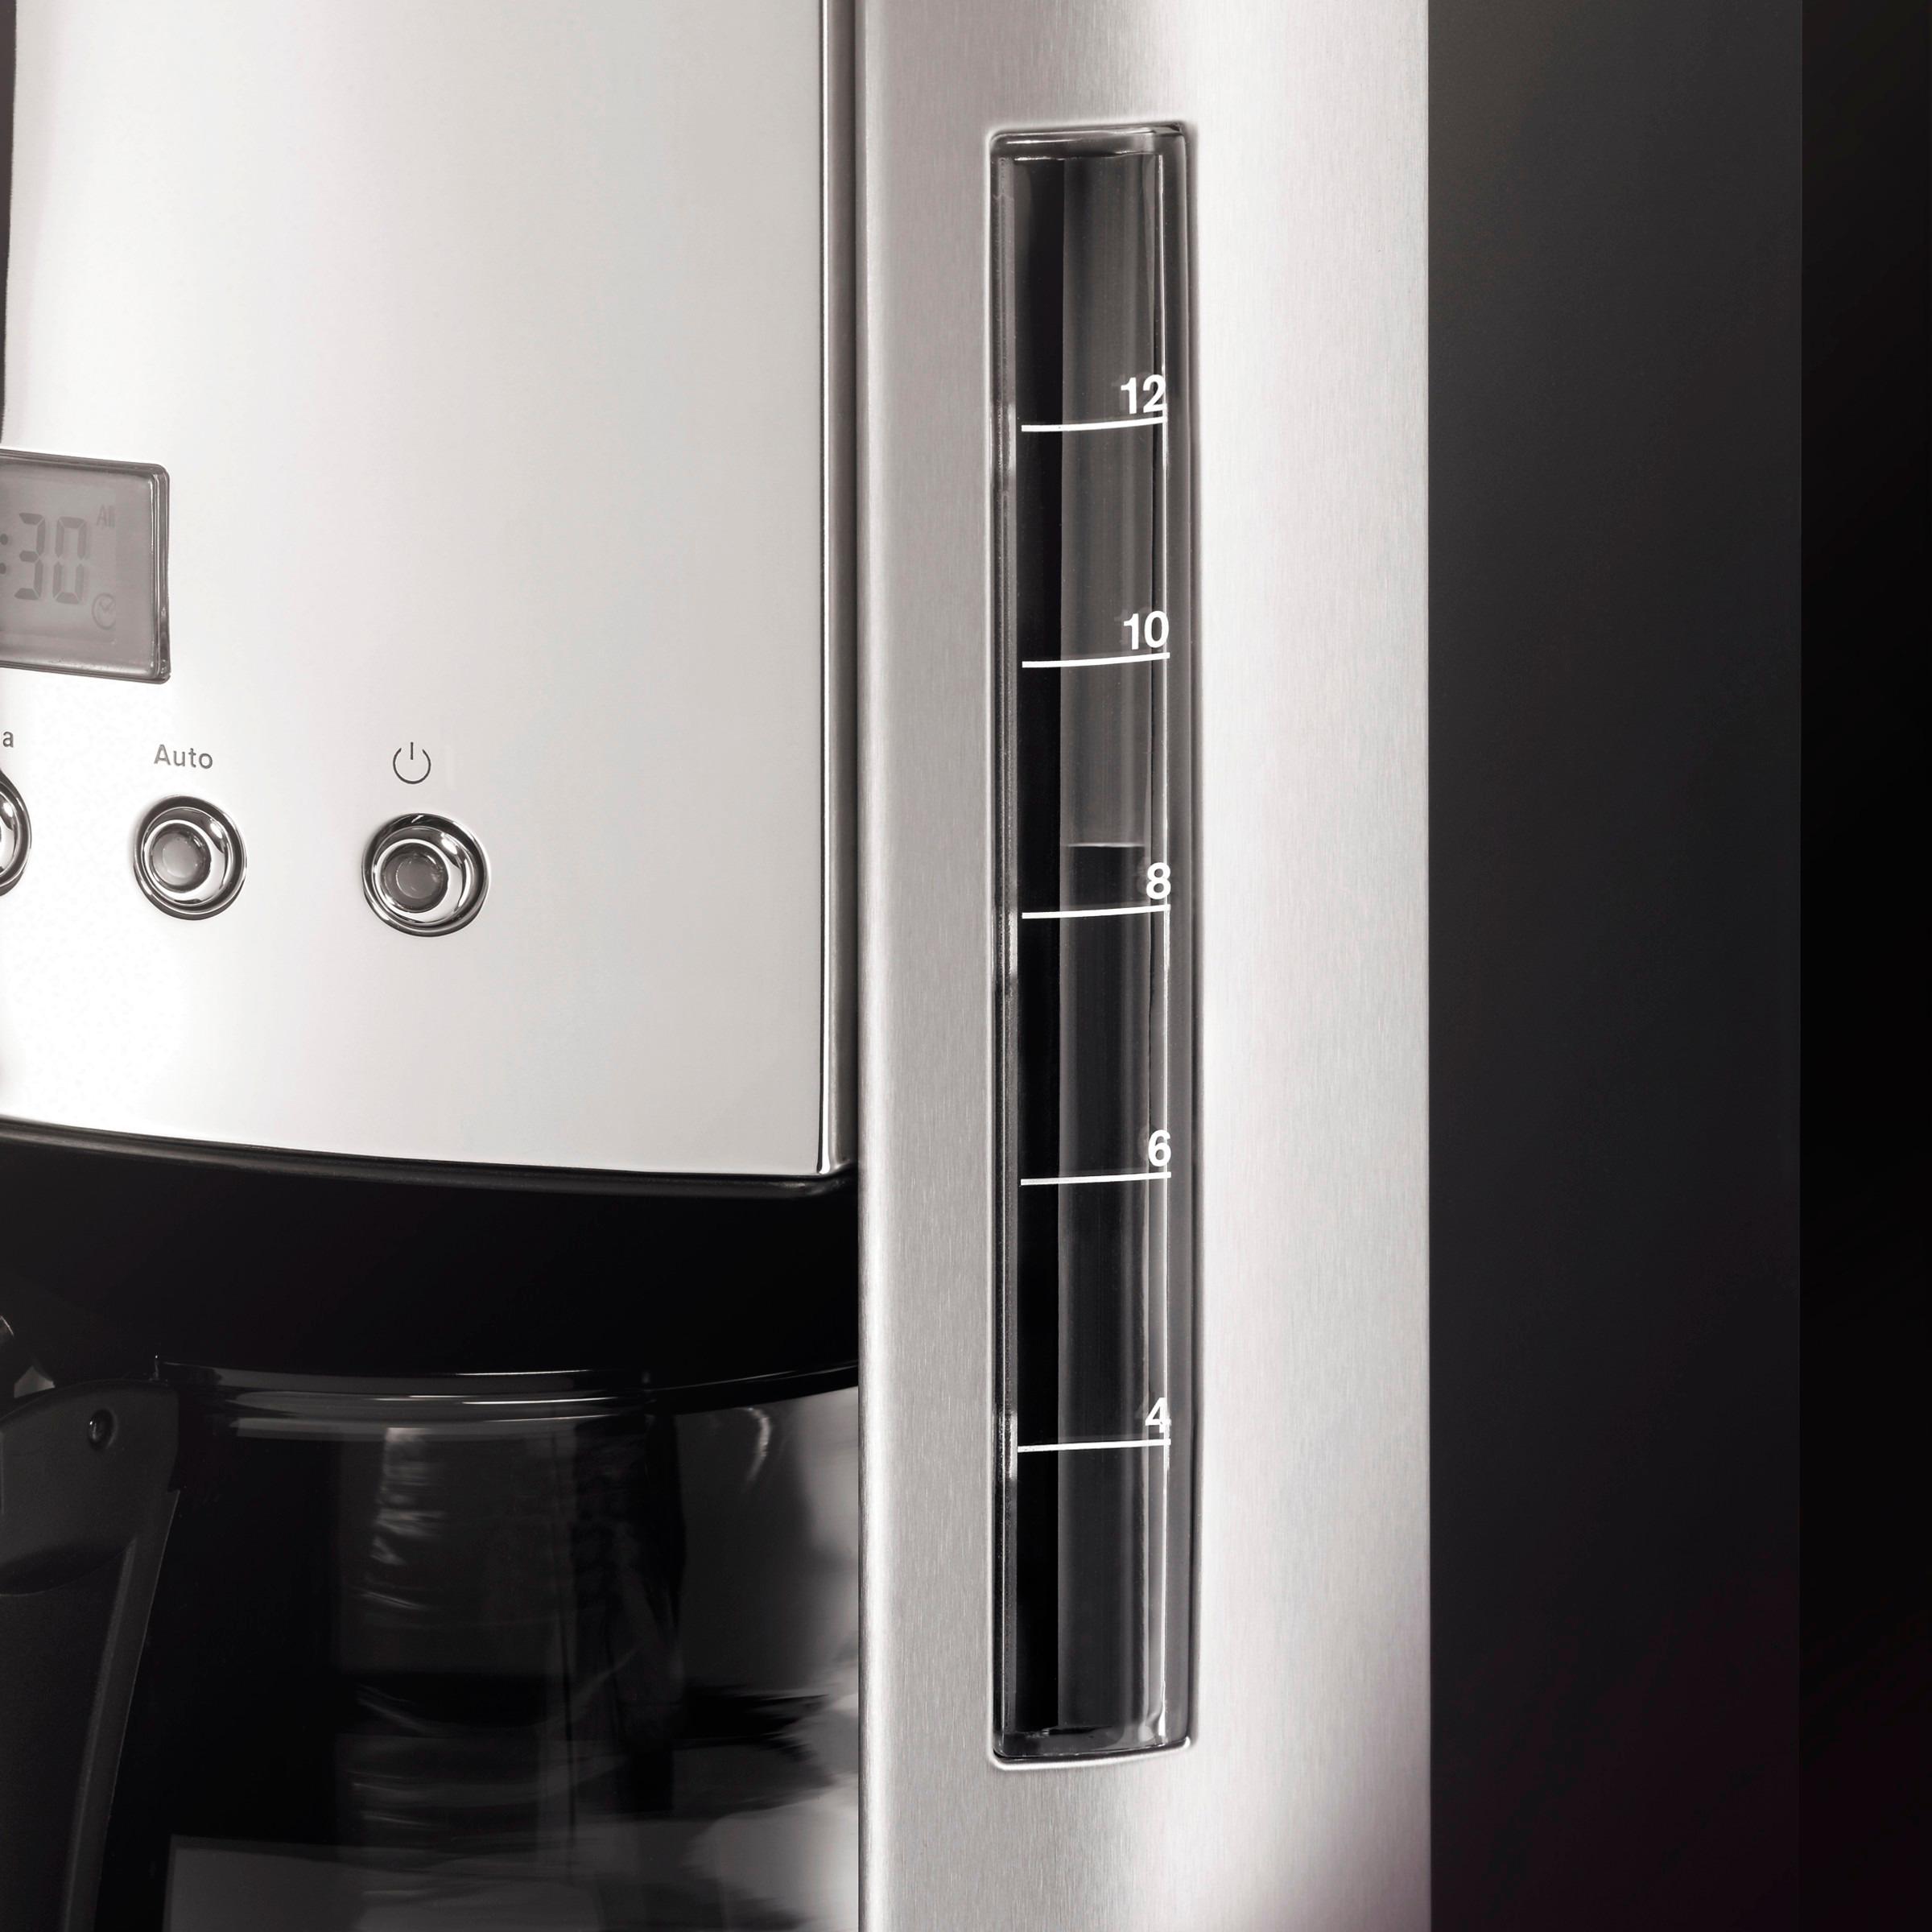 Best Buy: Krups 12-Cup Coffee Maker Stainless-Steel KM730D50